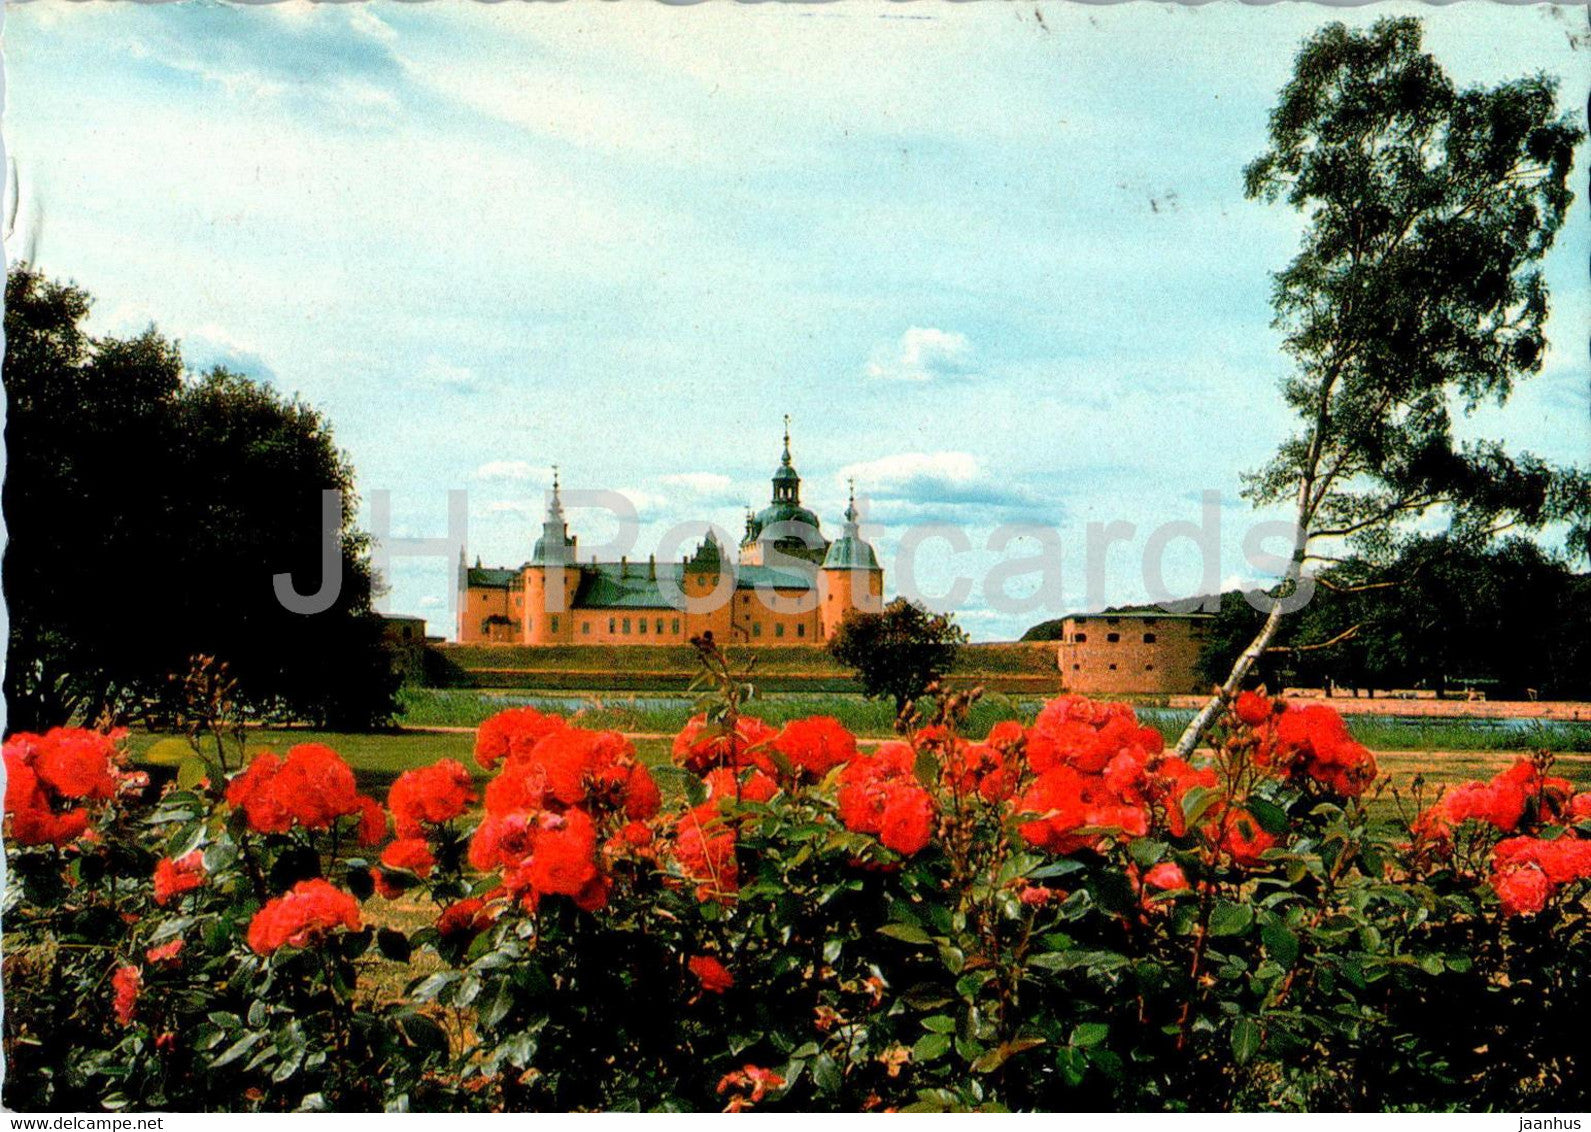 Kalmar slott - castle - 234 - 1988 - Sweden - used - JH Postcards